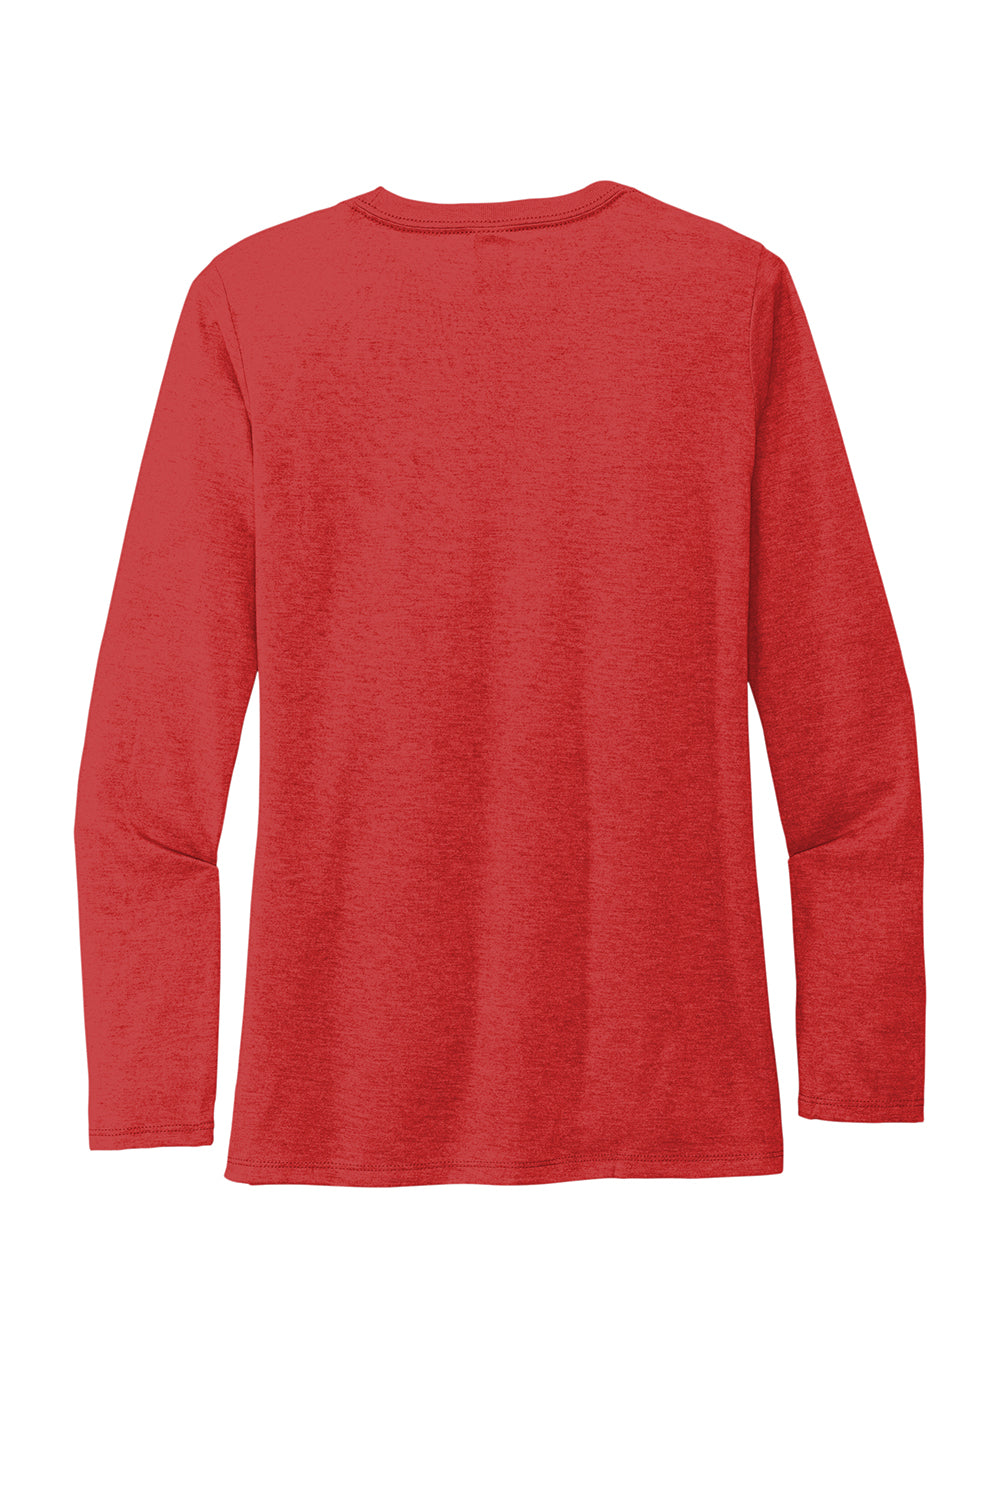 Allmade AL6008 Womens Long Sleeve Crewneck T-Shirt Rise Up Red Flat Back